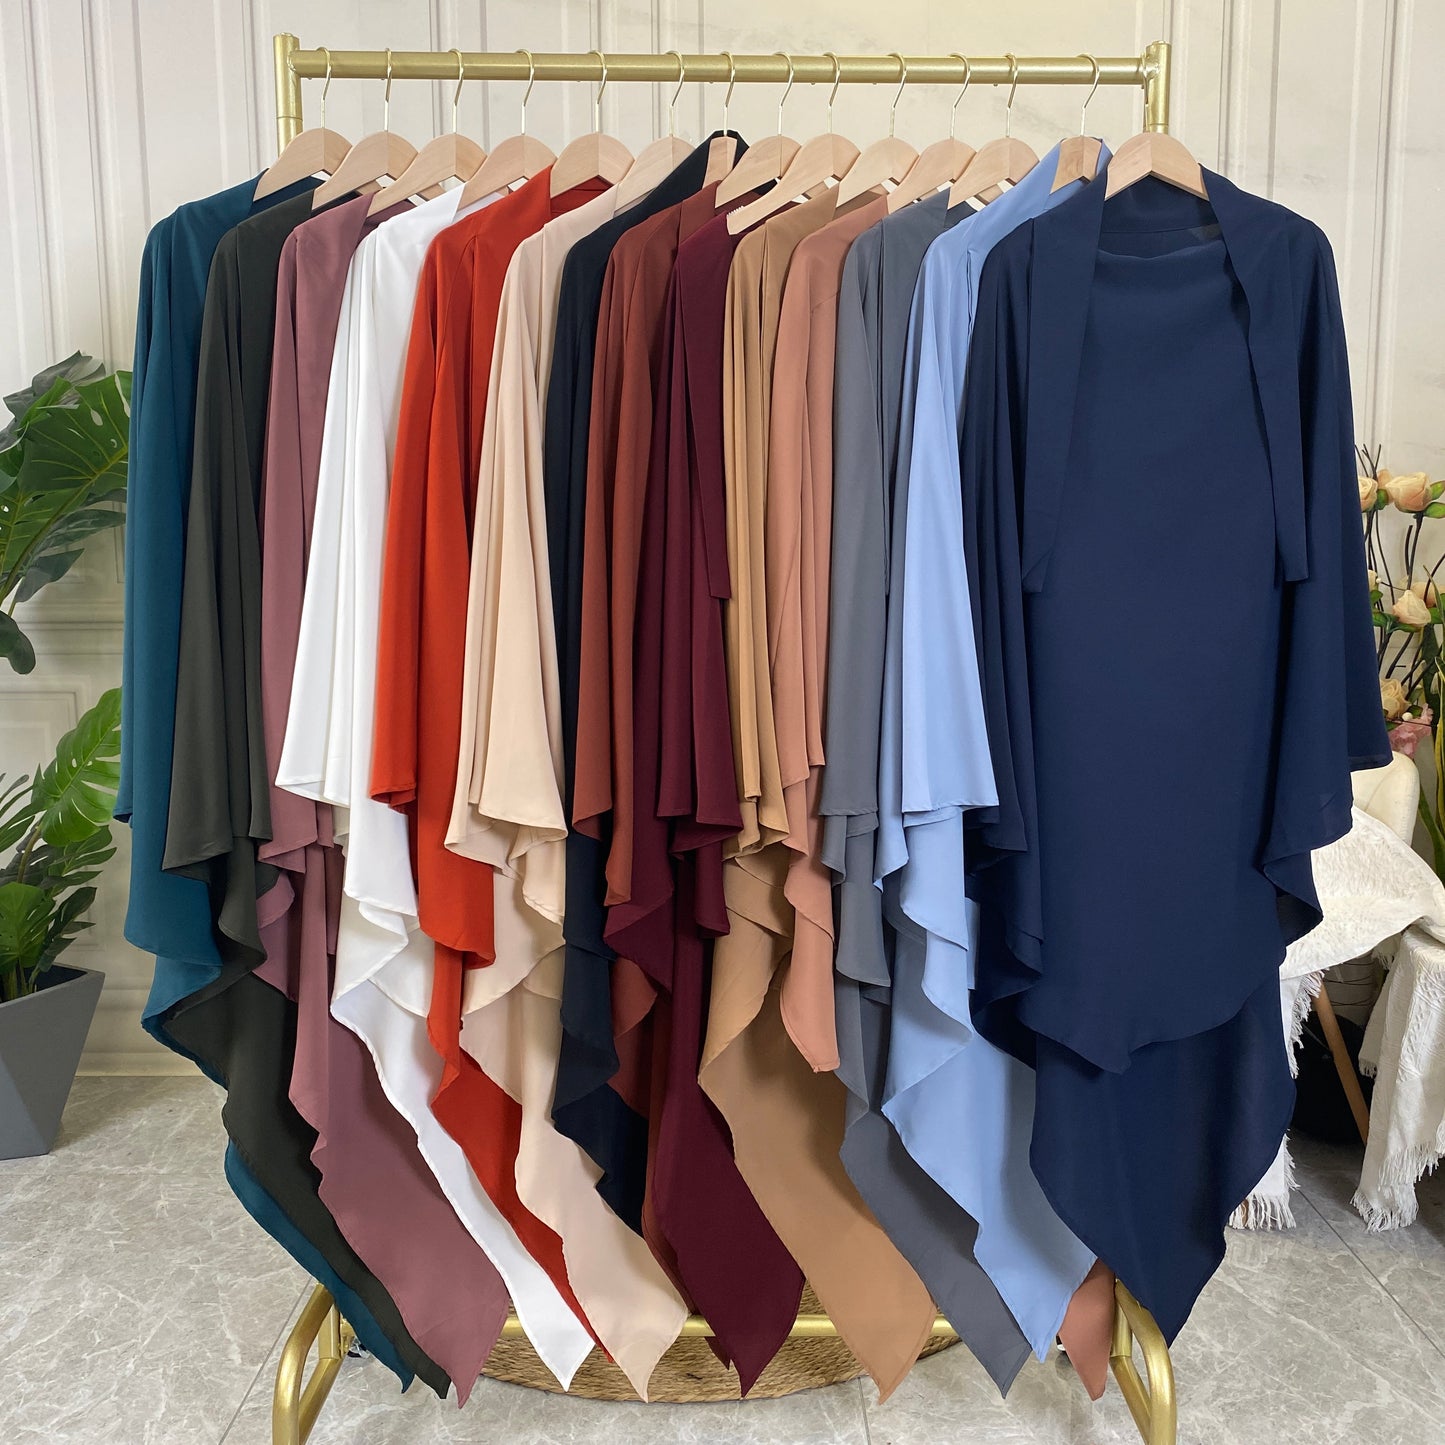 Khimar : Single Layer Triangular Diamond Instant Khimar-Hijab-Jilbab for Girls & Women in Single Layer Amy Green Color | Tie Back Burkha Jilbab Khimar Style Abaya Hijab Niqab Islamic Modest Wear